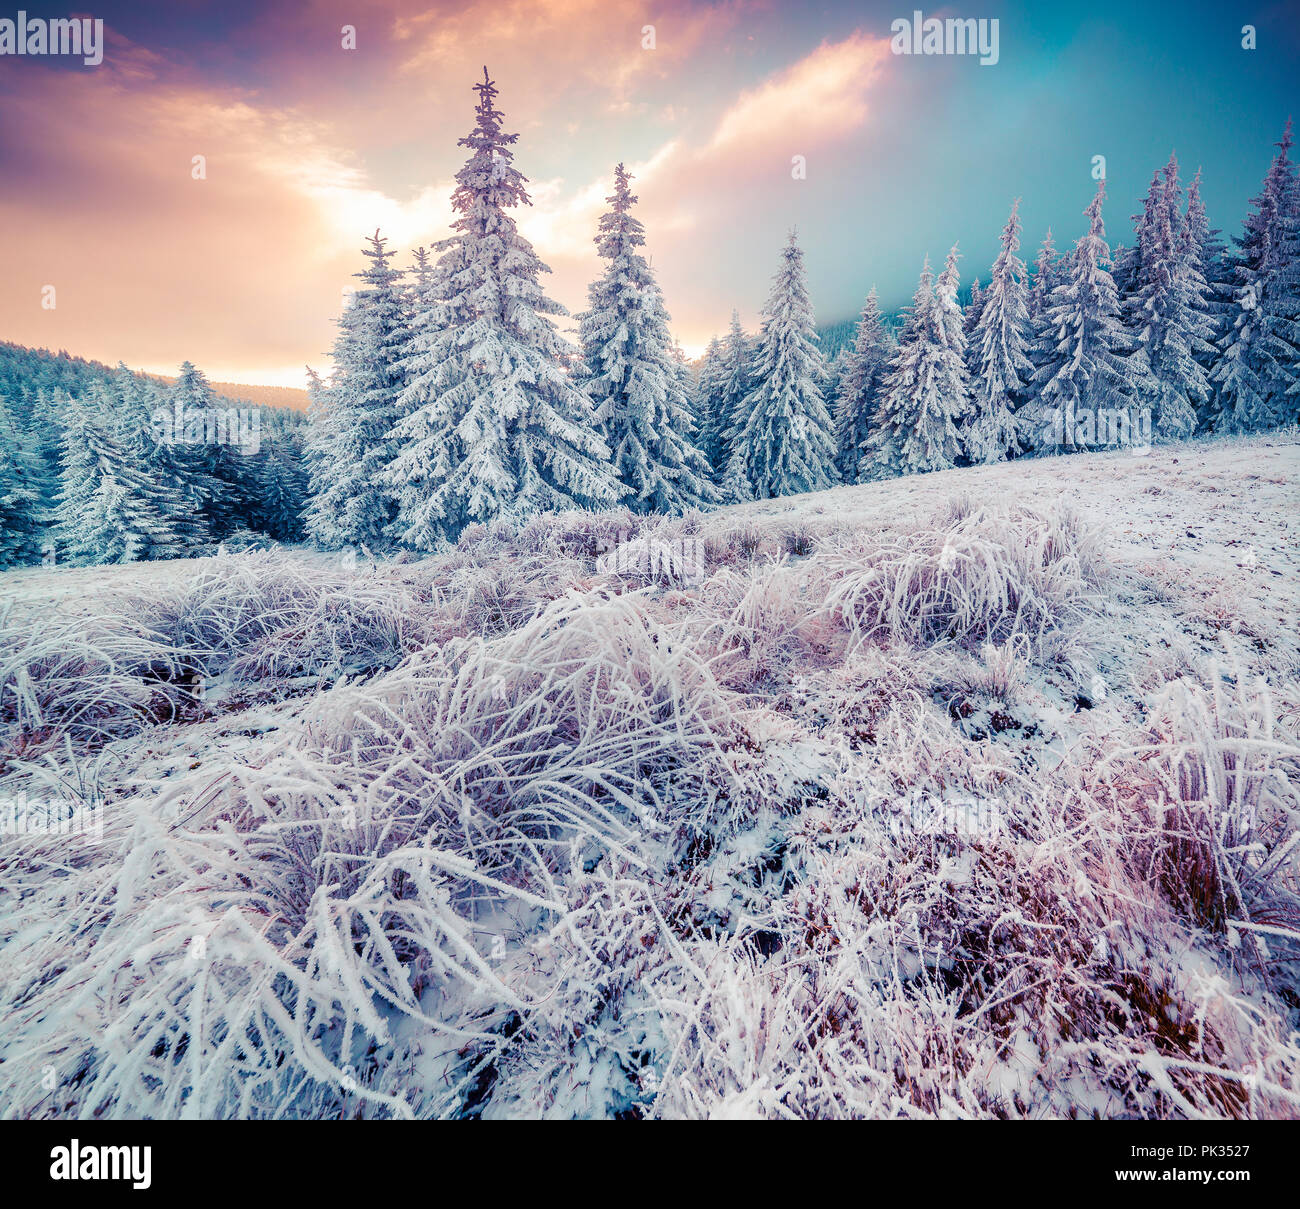 Colorful winter sunrise in the Carpathian mountain forest. Ukraine, Europe. Instagram toning. Stock Photo